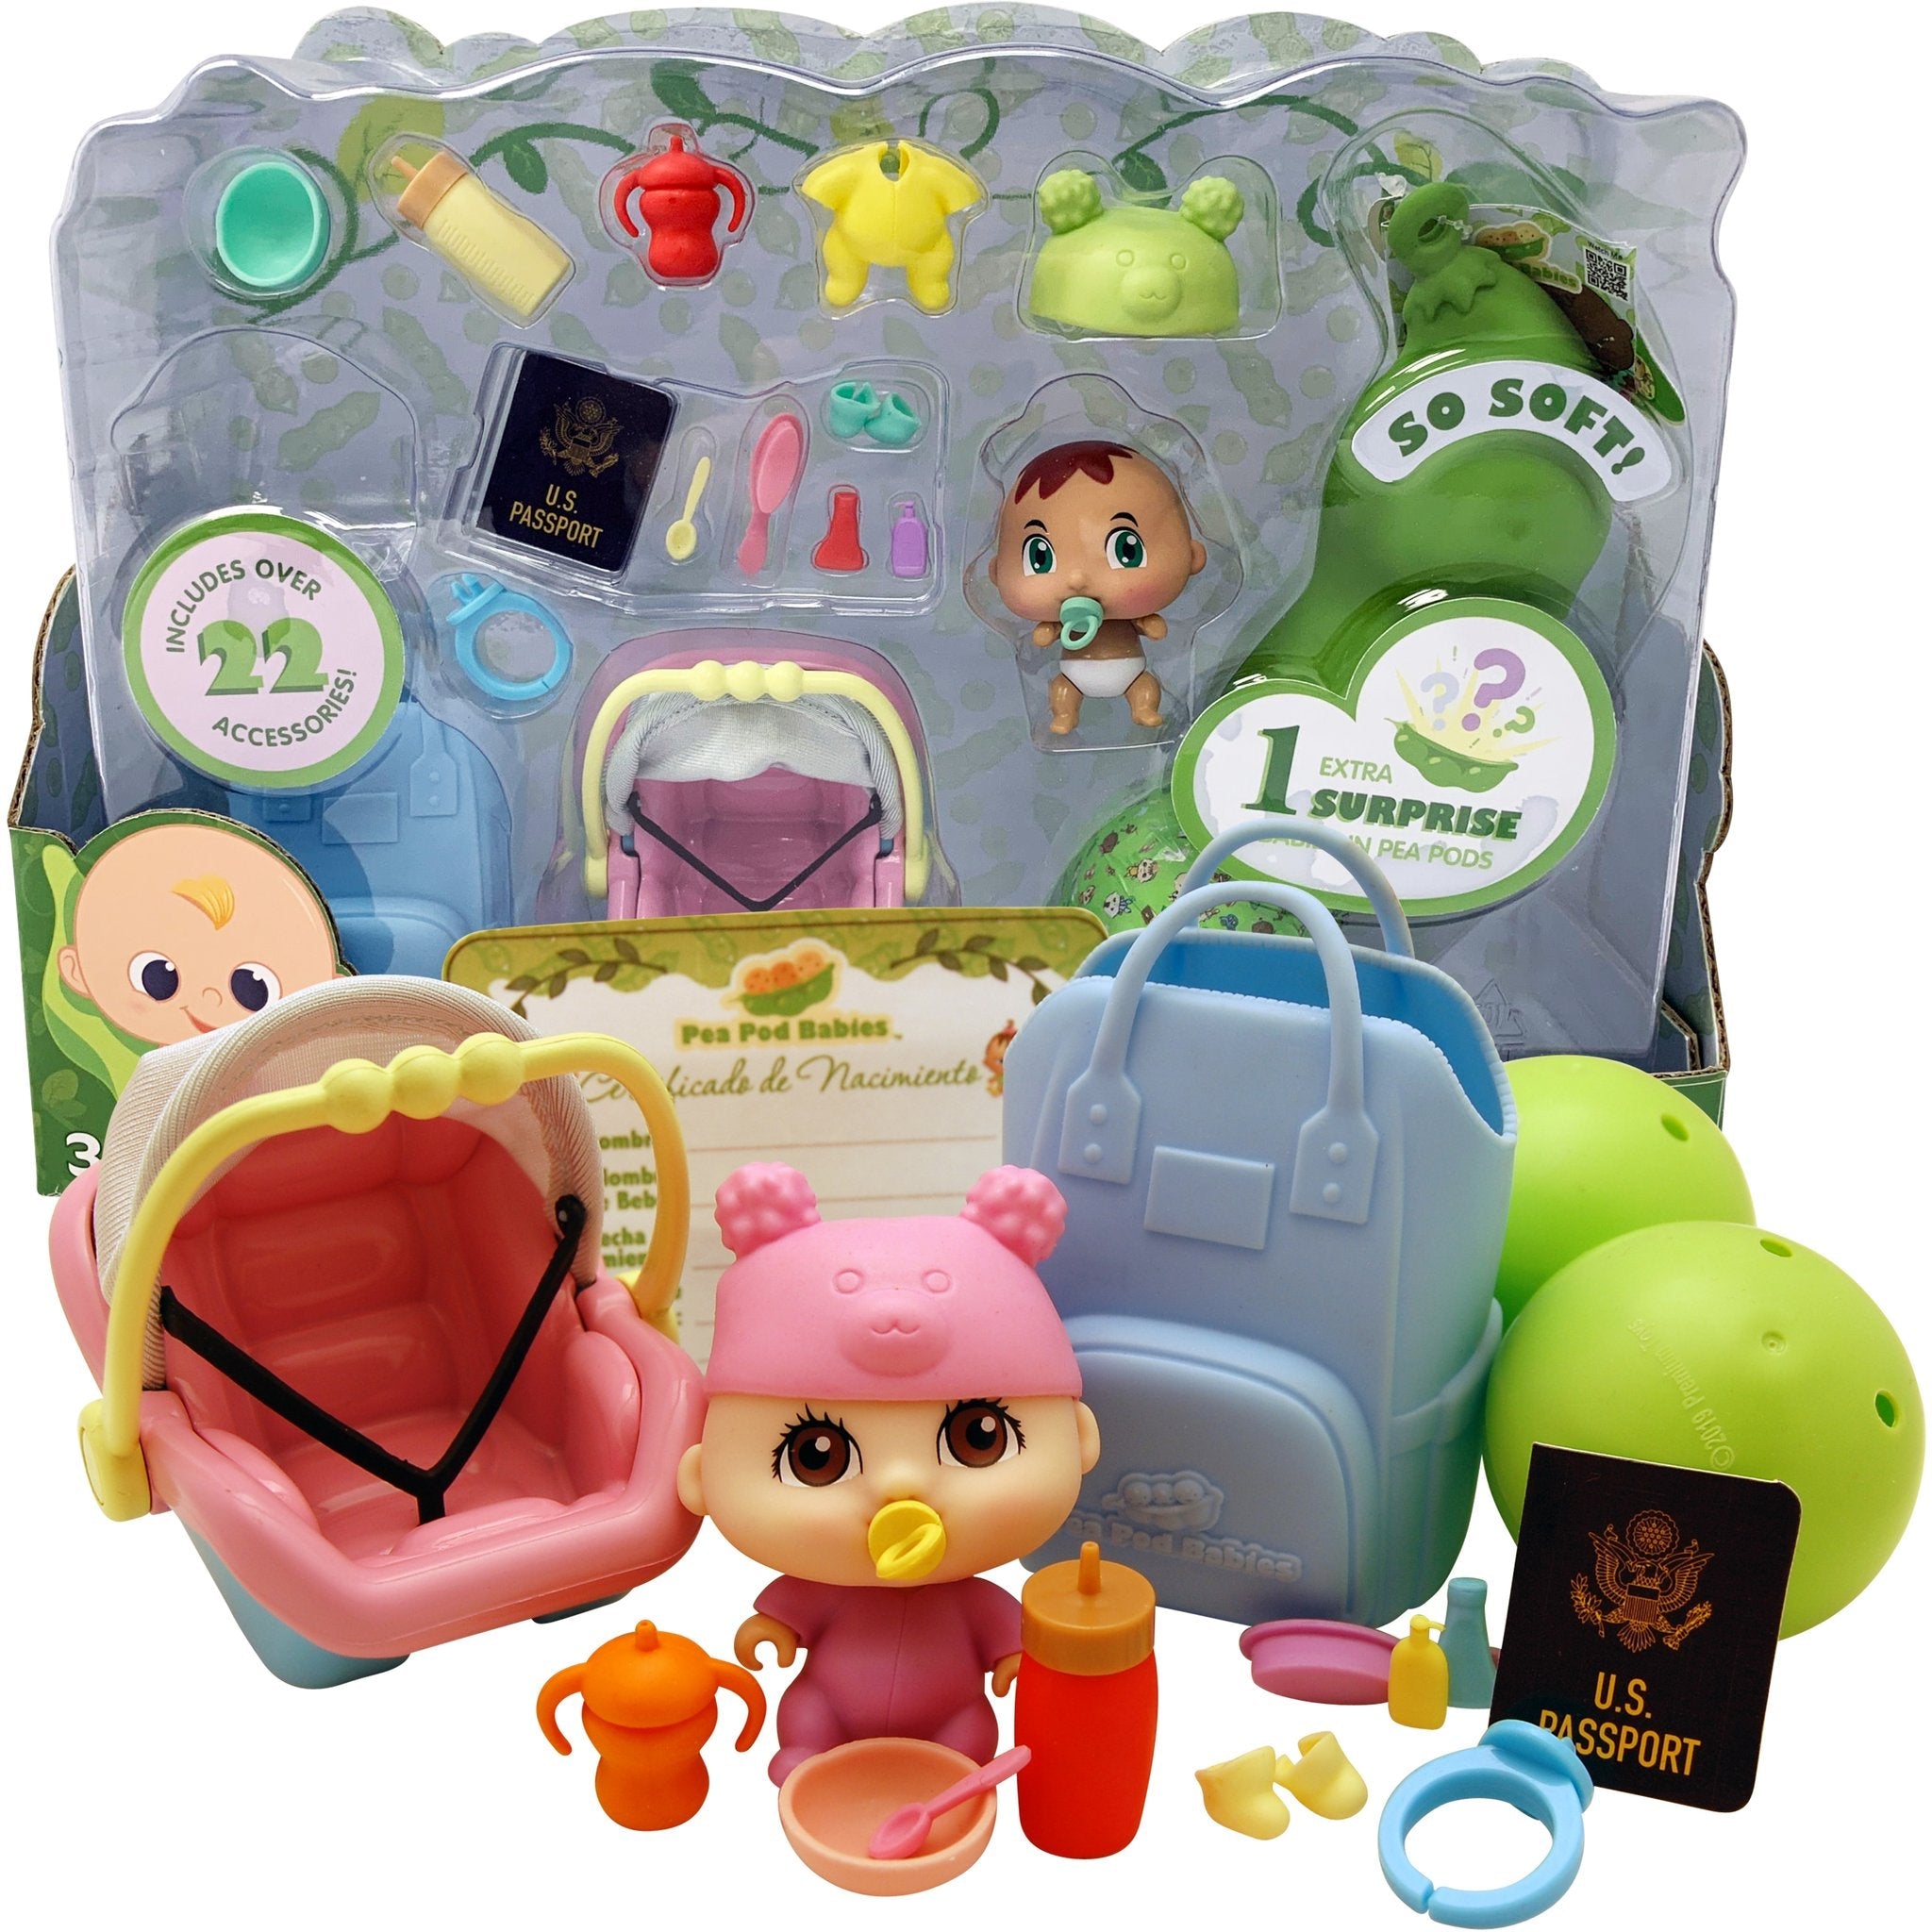 Pea Pod Babies - Little Traveler 22-PC Set